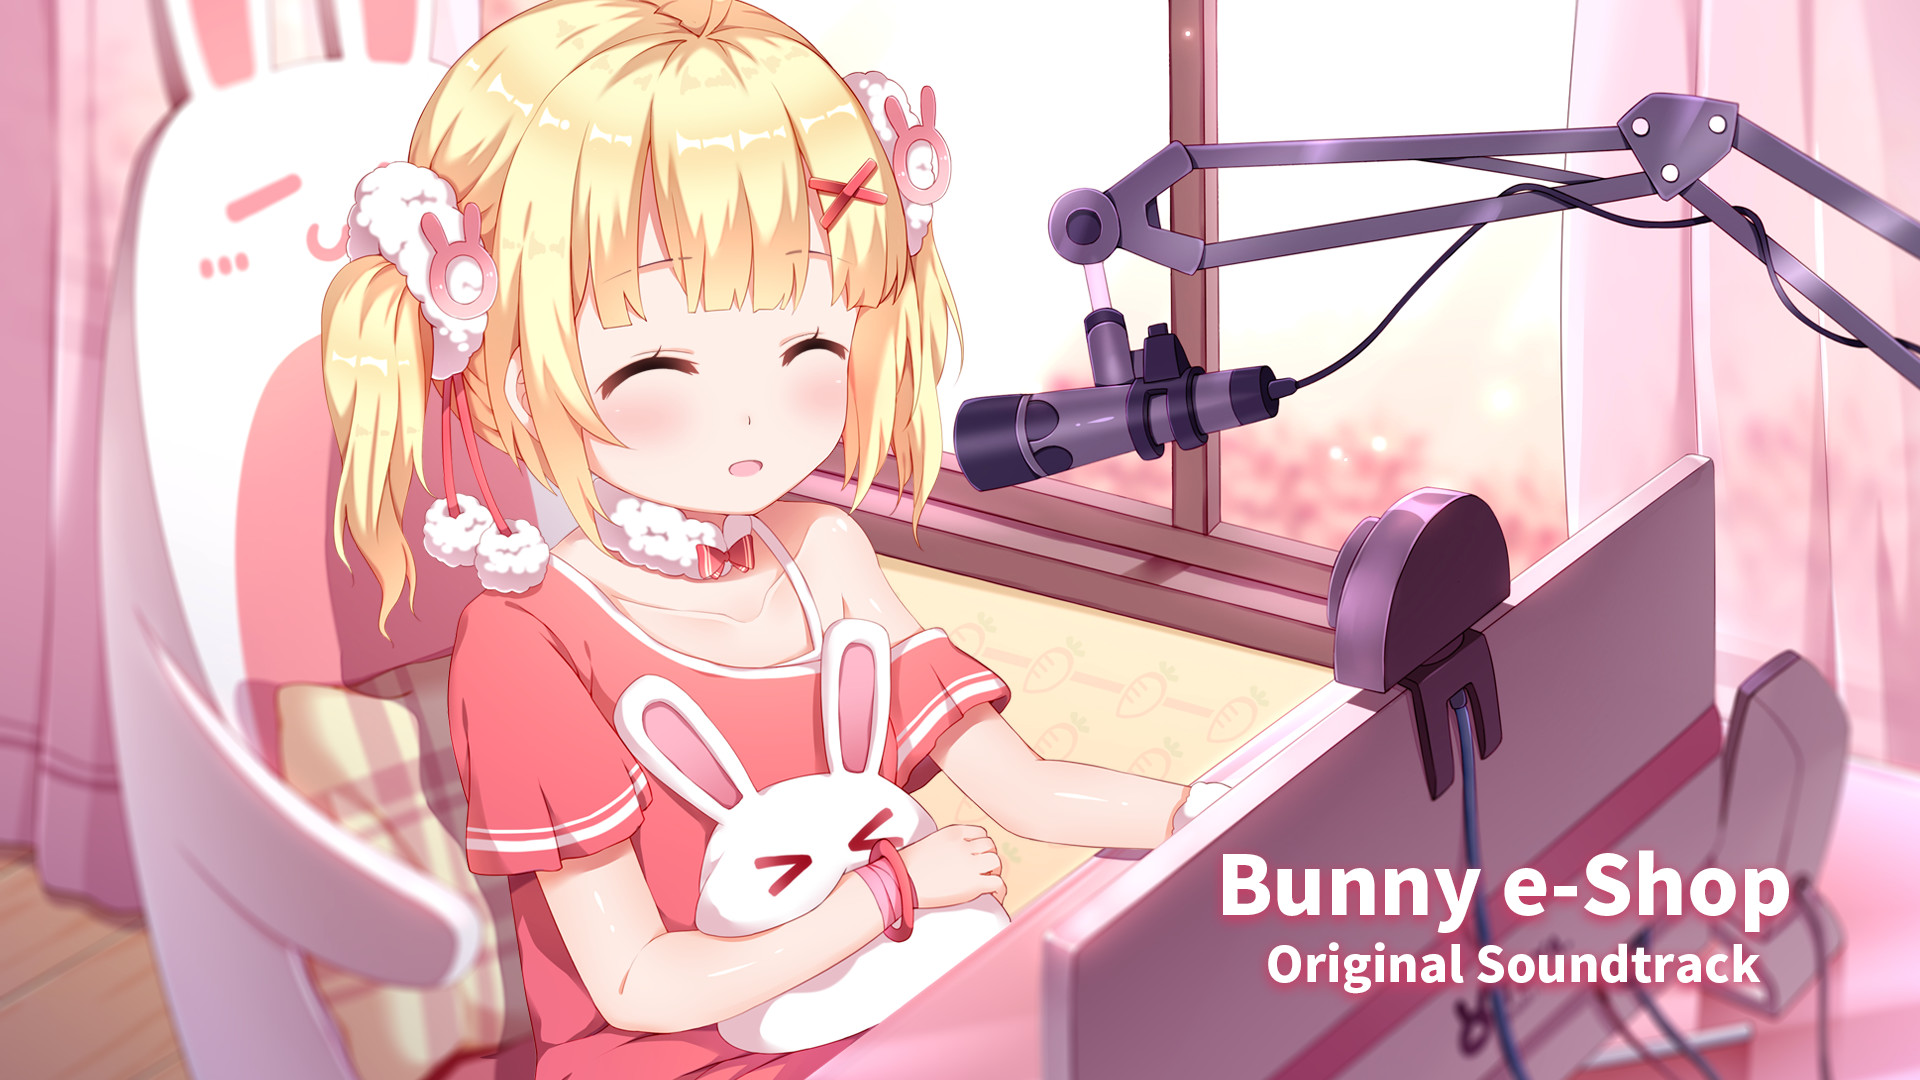 Bunny e-Shop Soundtrack Featured Screenshot #1